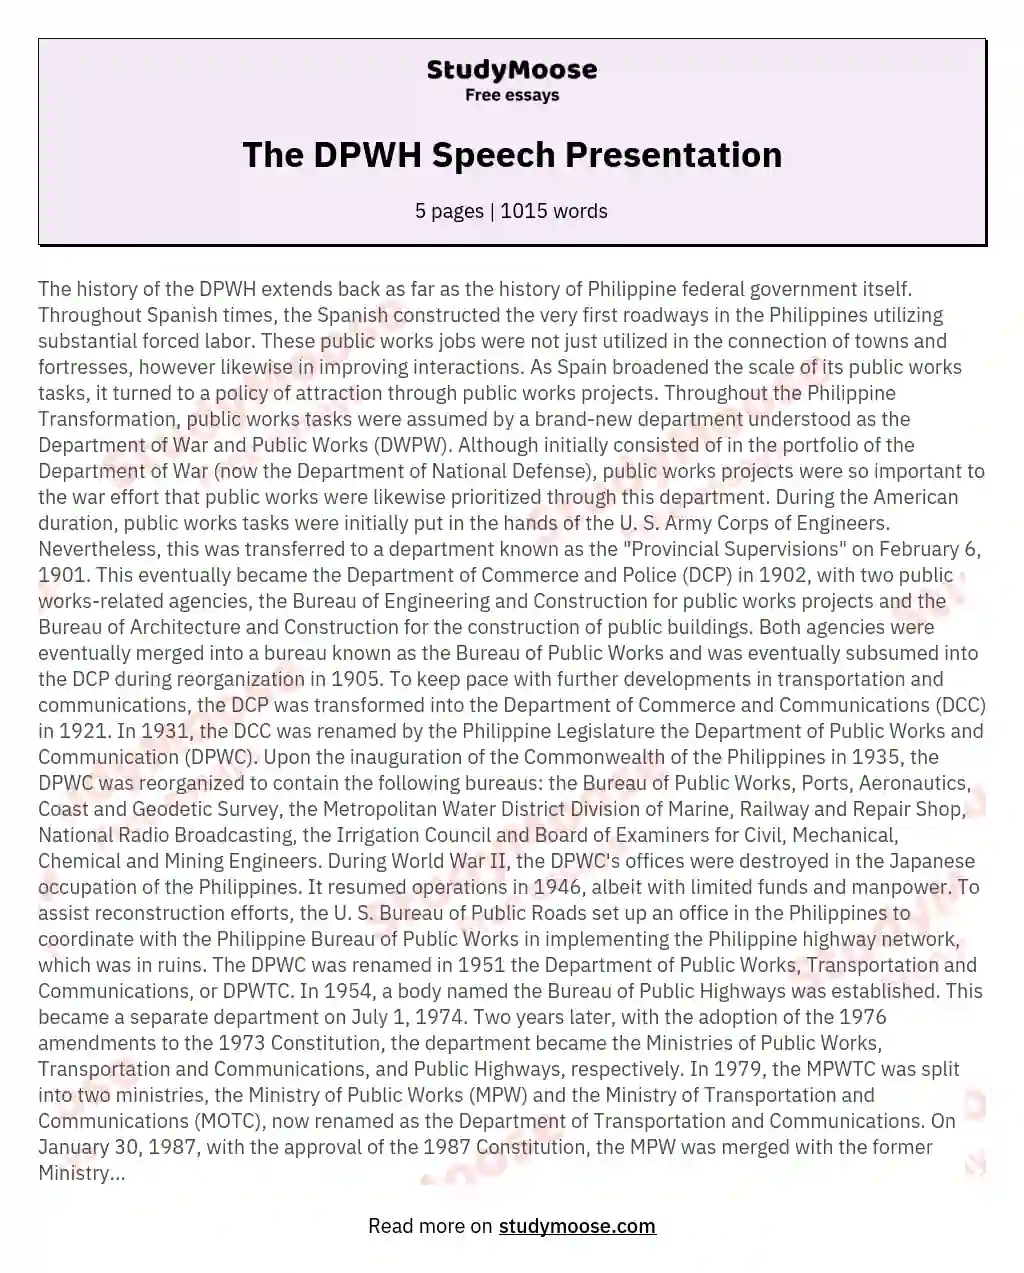 The DPWH Speech Presentation essay